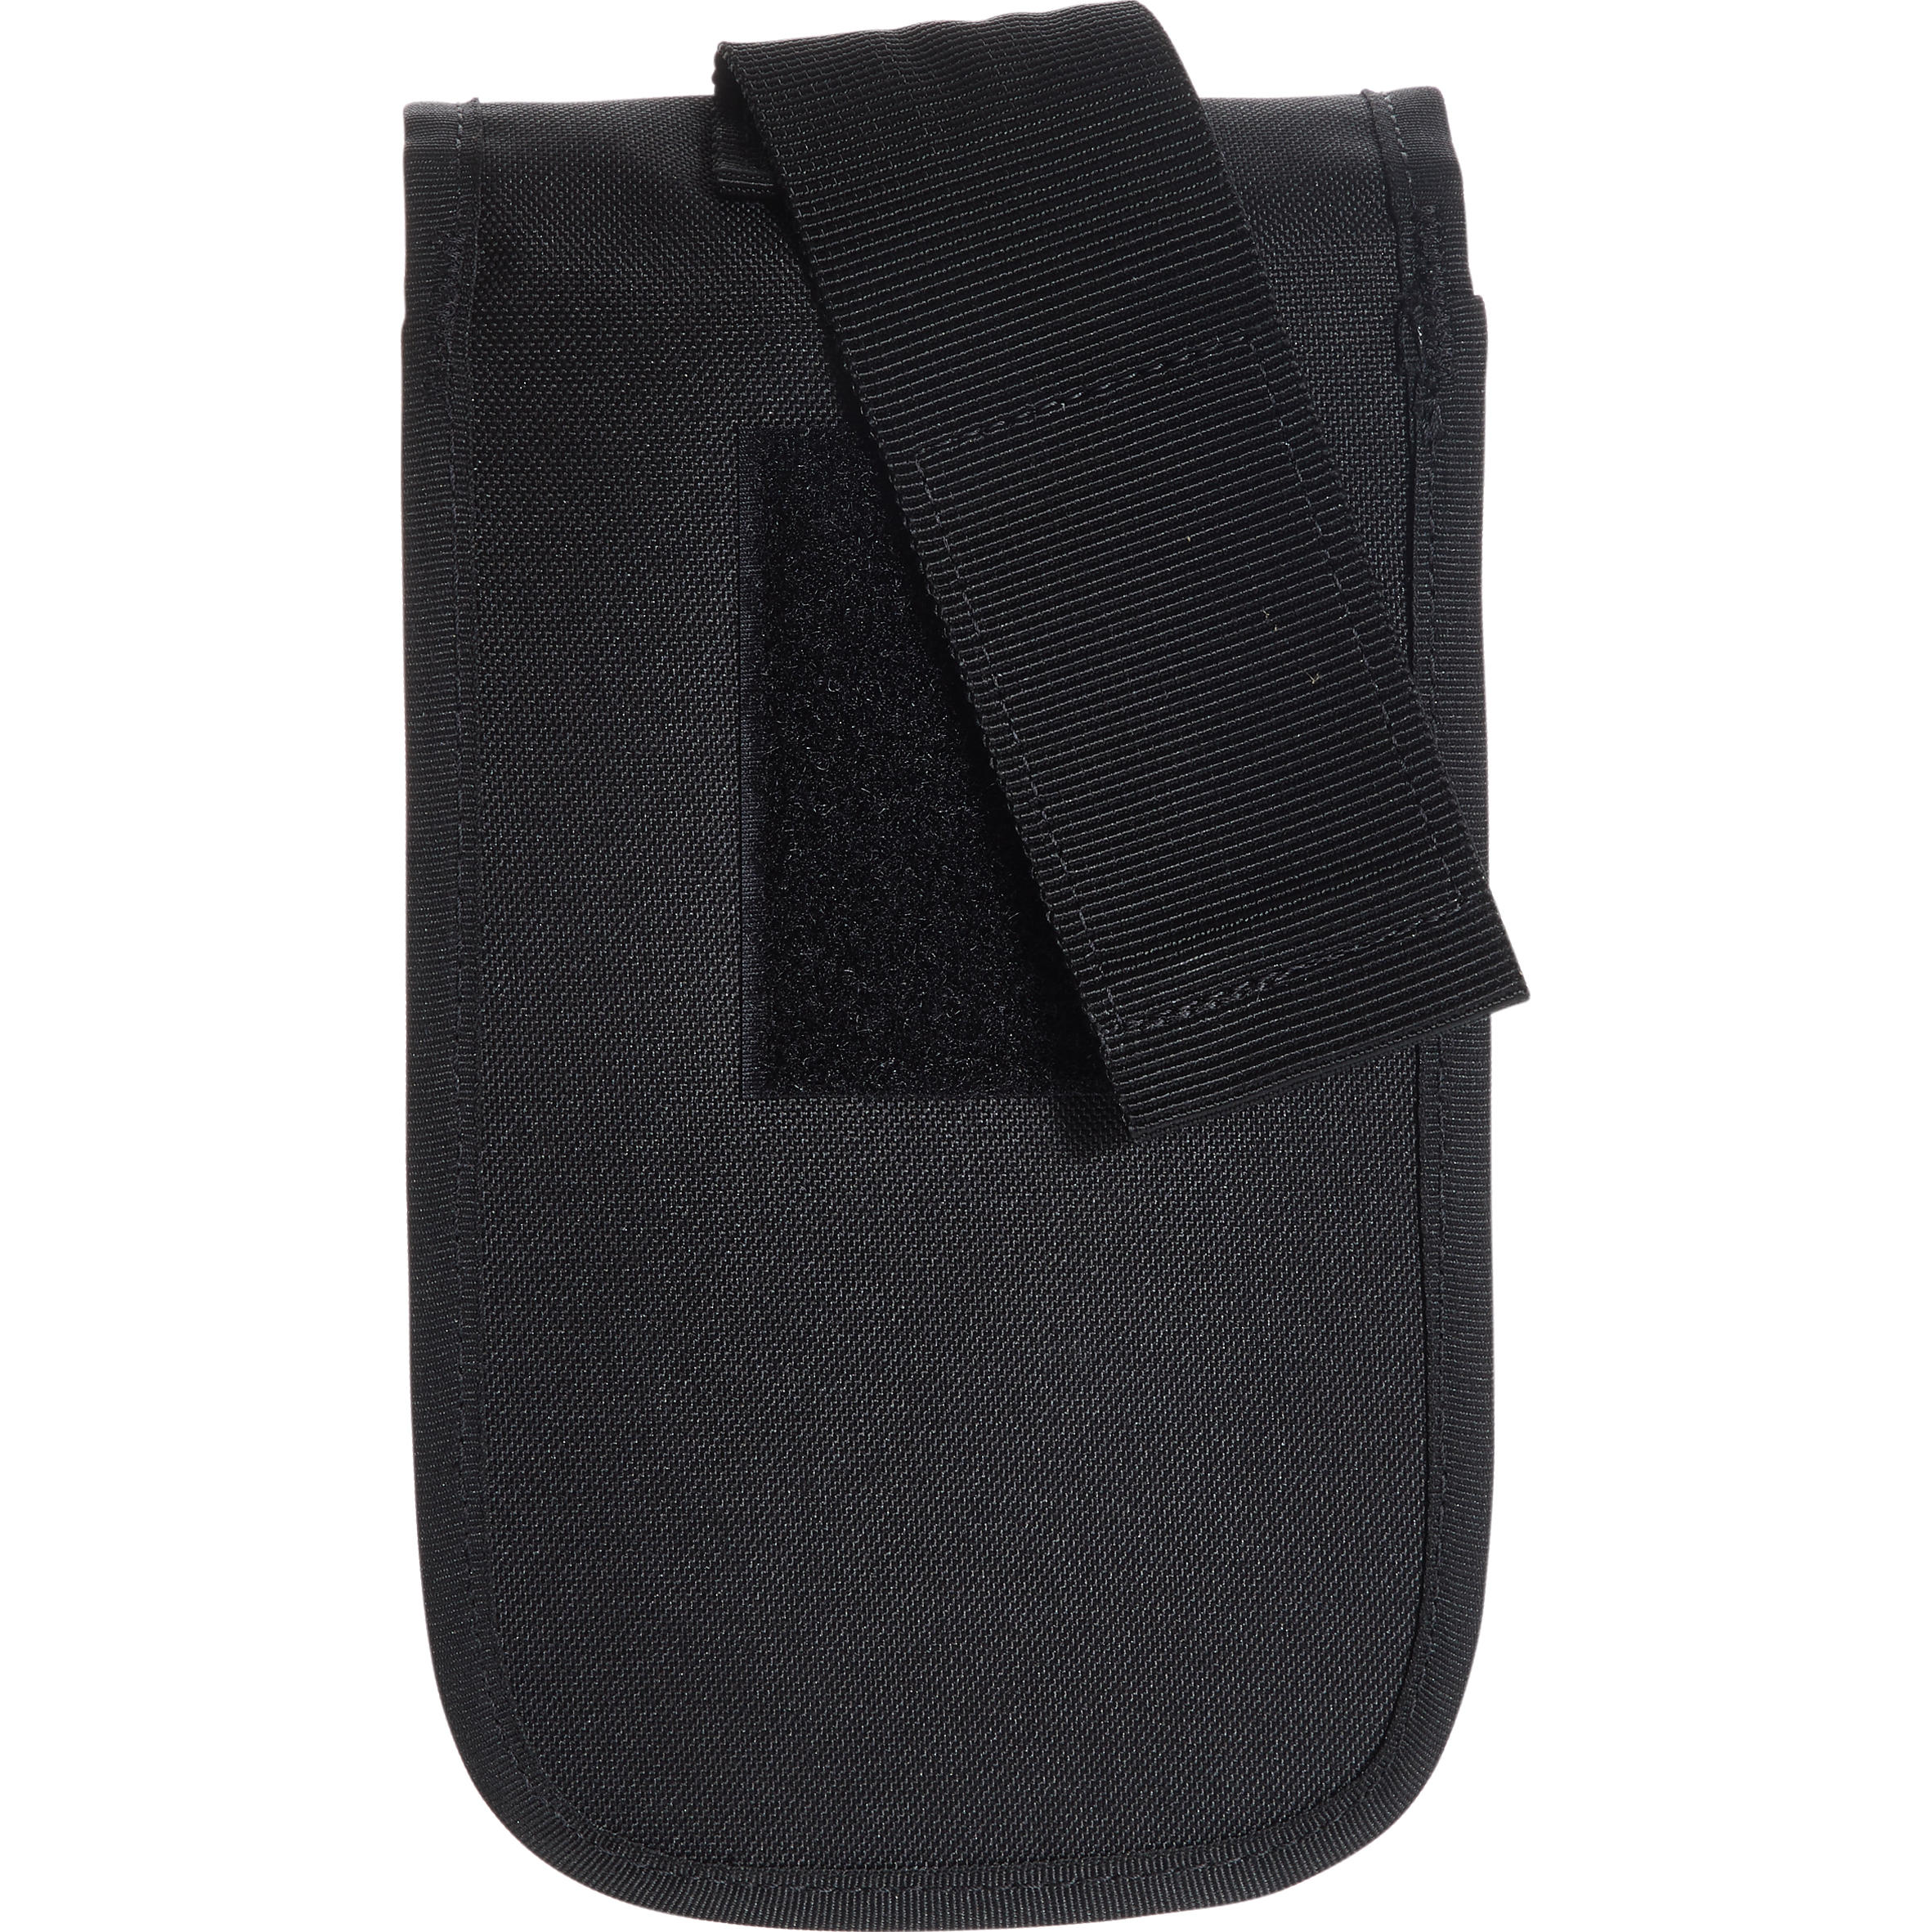 Accessories pocket for SCD 500D buoyancy vest 2/5